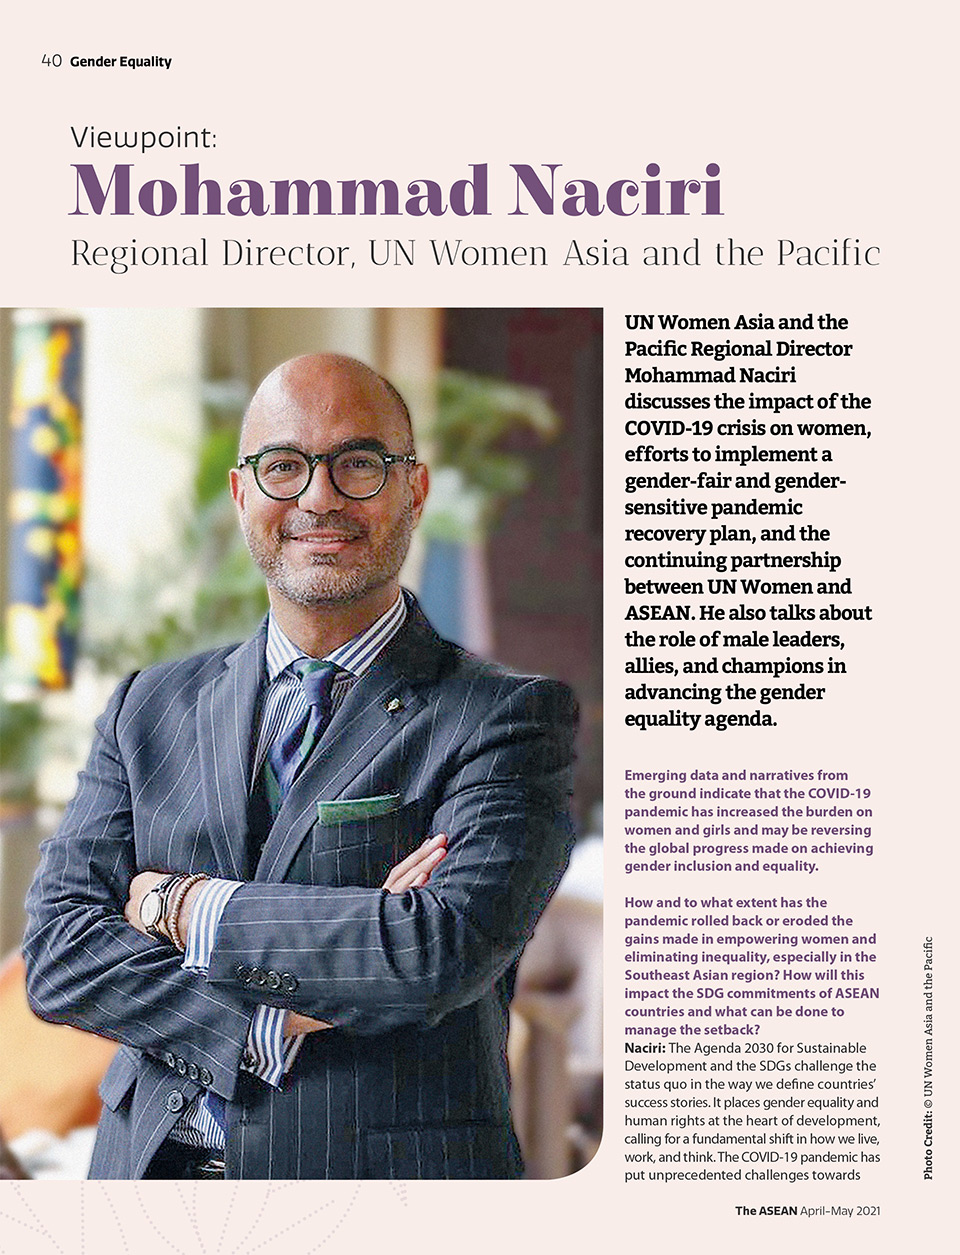 UN Women Regional Director Mohammad Naciri's Interview with the ASEAN Magazine